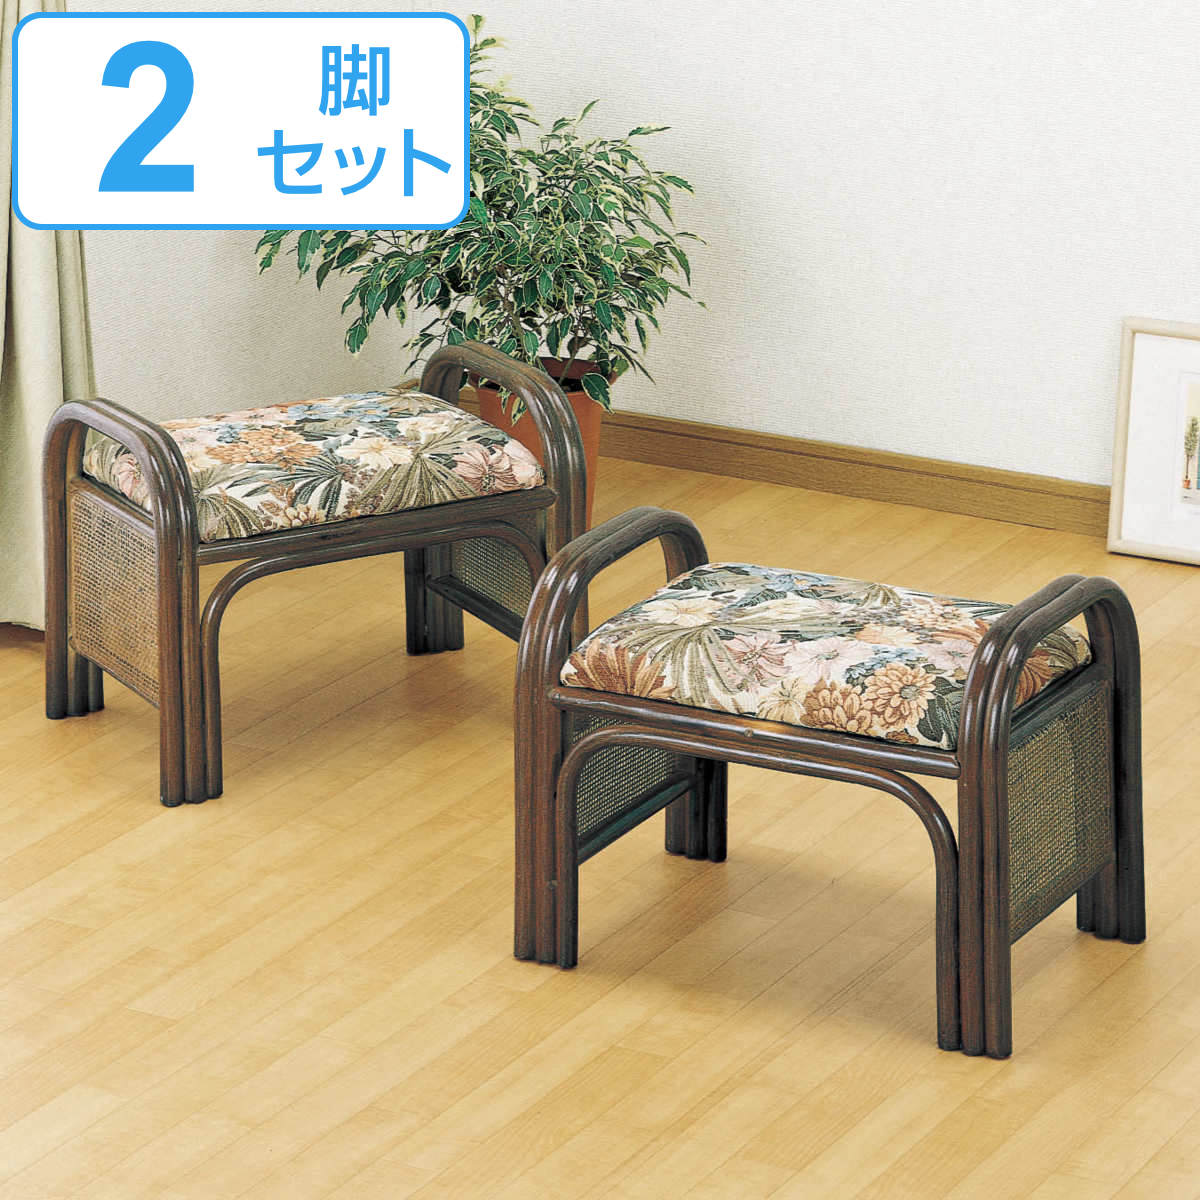 限定版 楽々座椅子 籐 ハイタイプ 座面高31cm 2個組